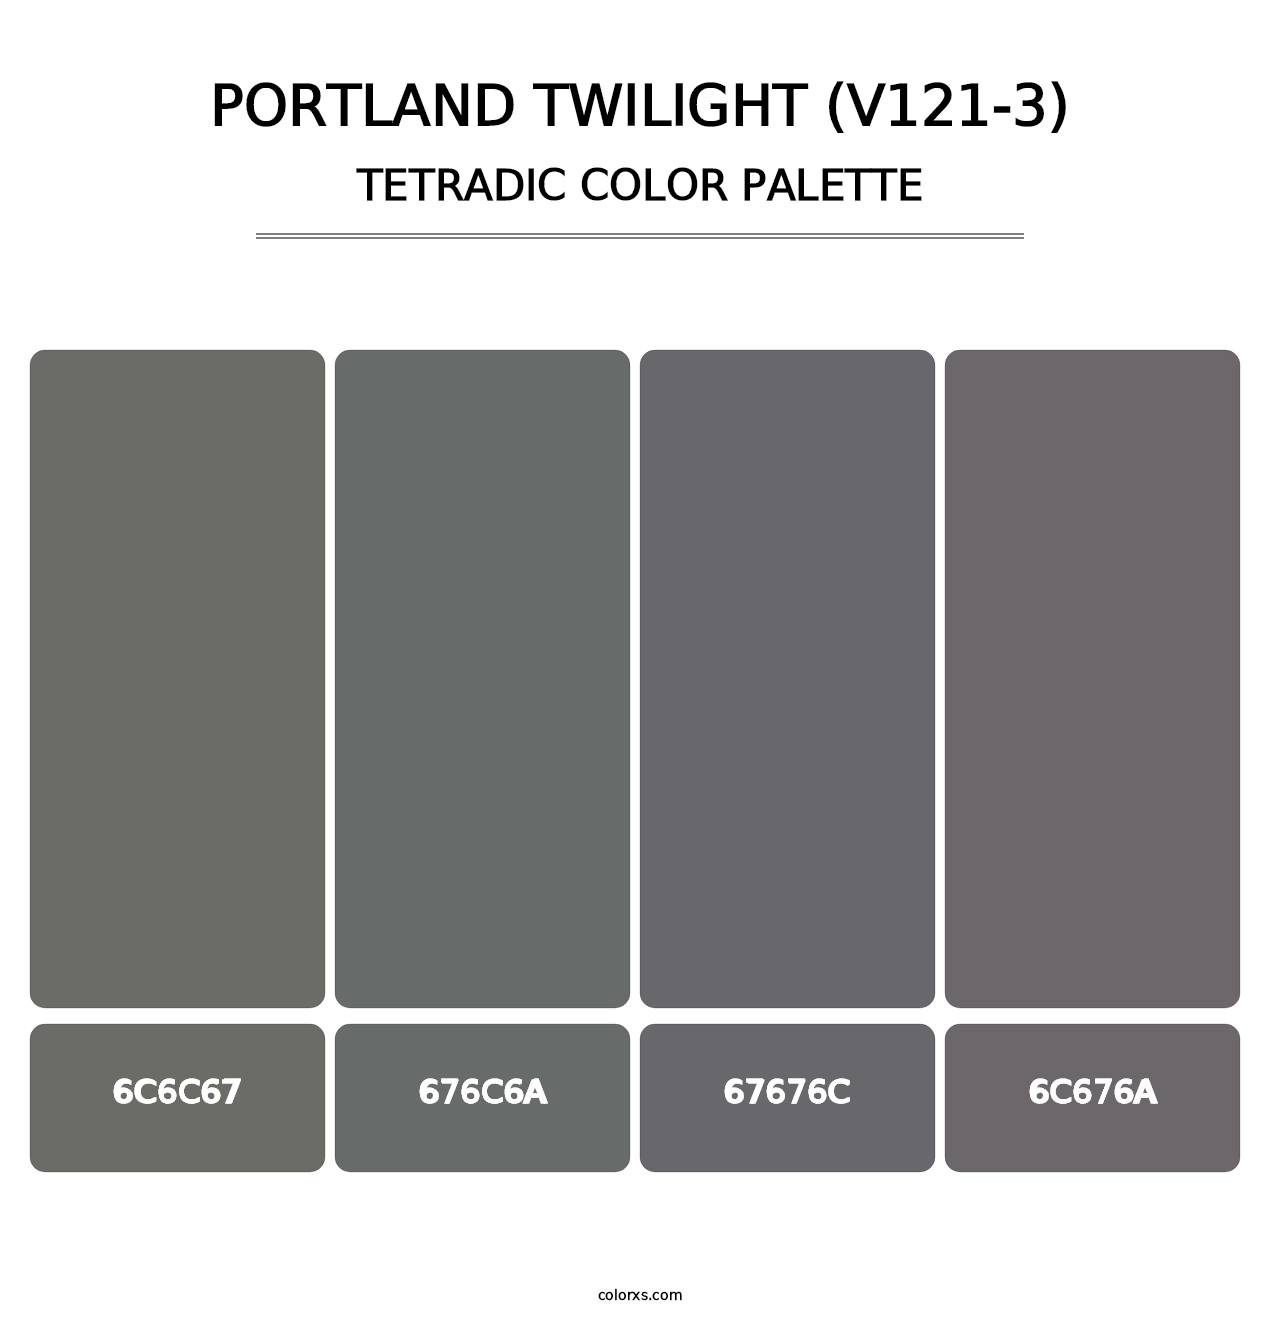 Portland Twilight (V121-3) - Tetradic Color Palette